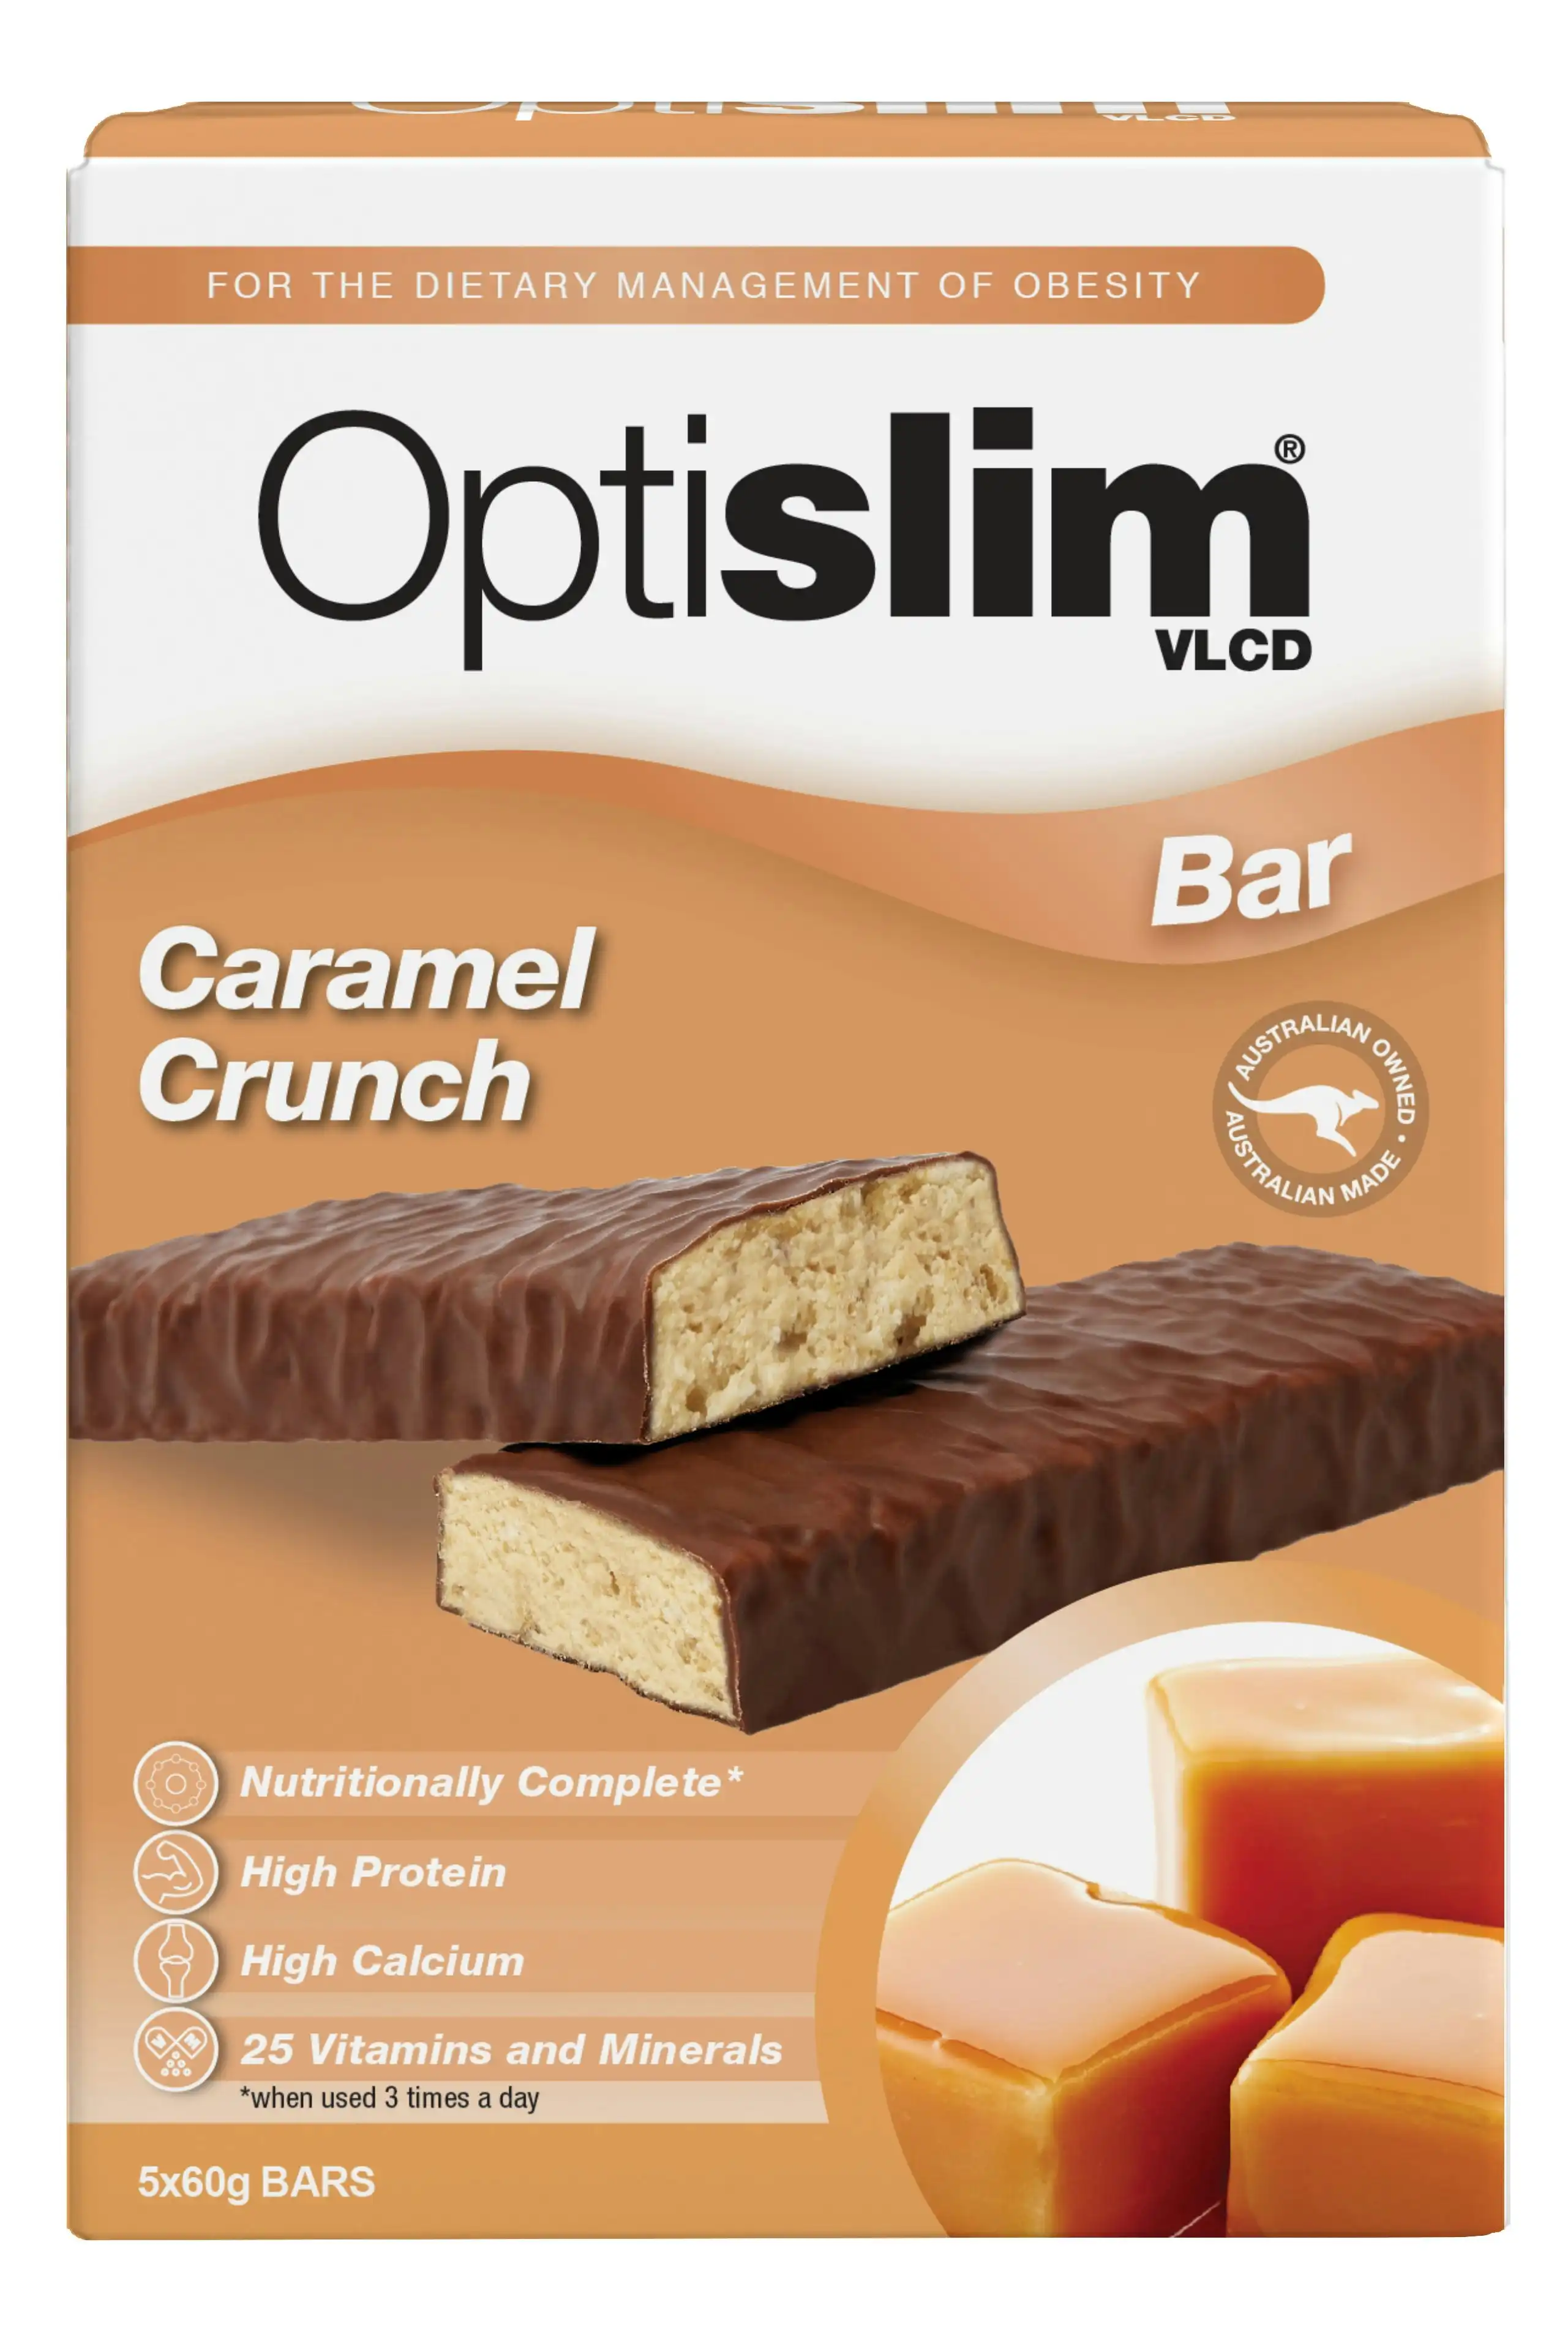 OptiSlim VLCD Caramel Crunch Bar 5X60g